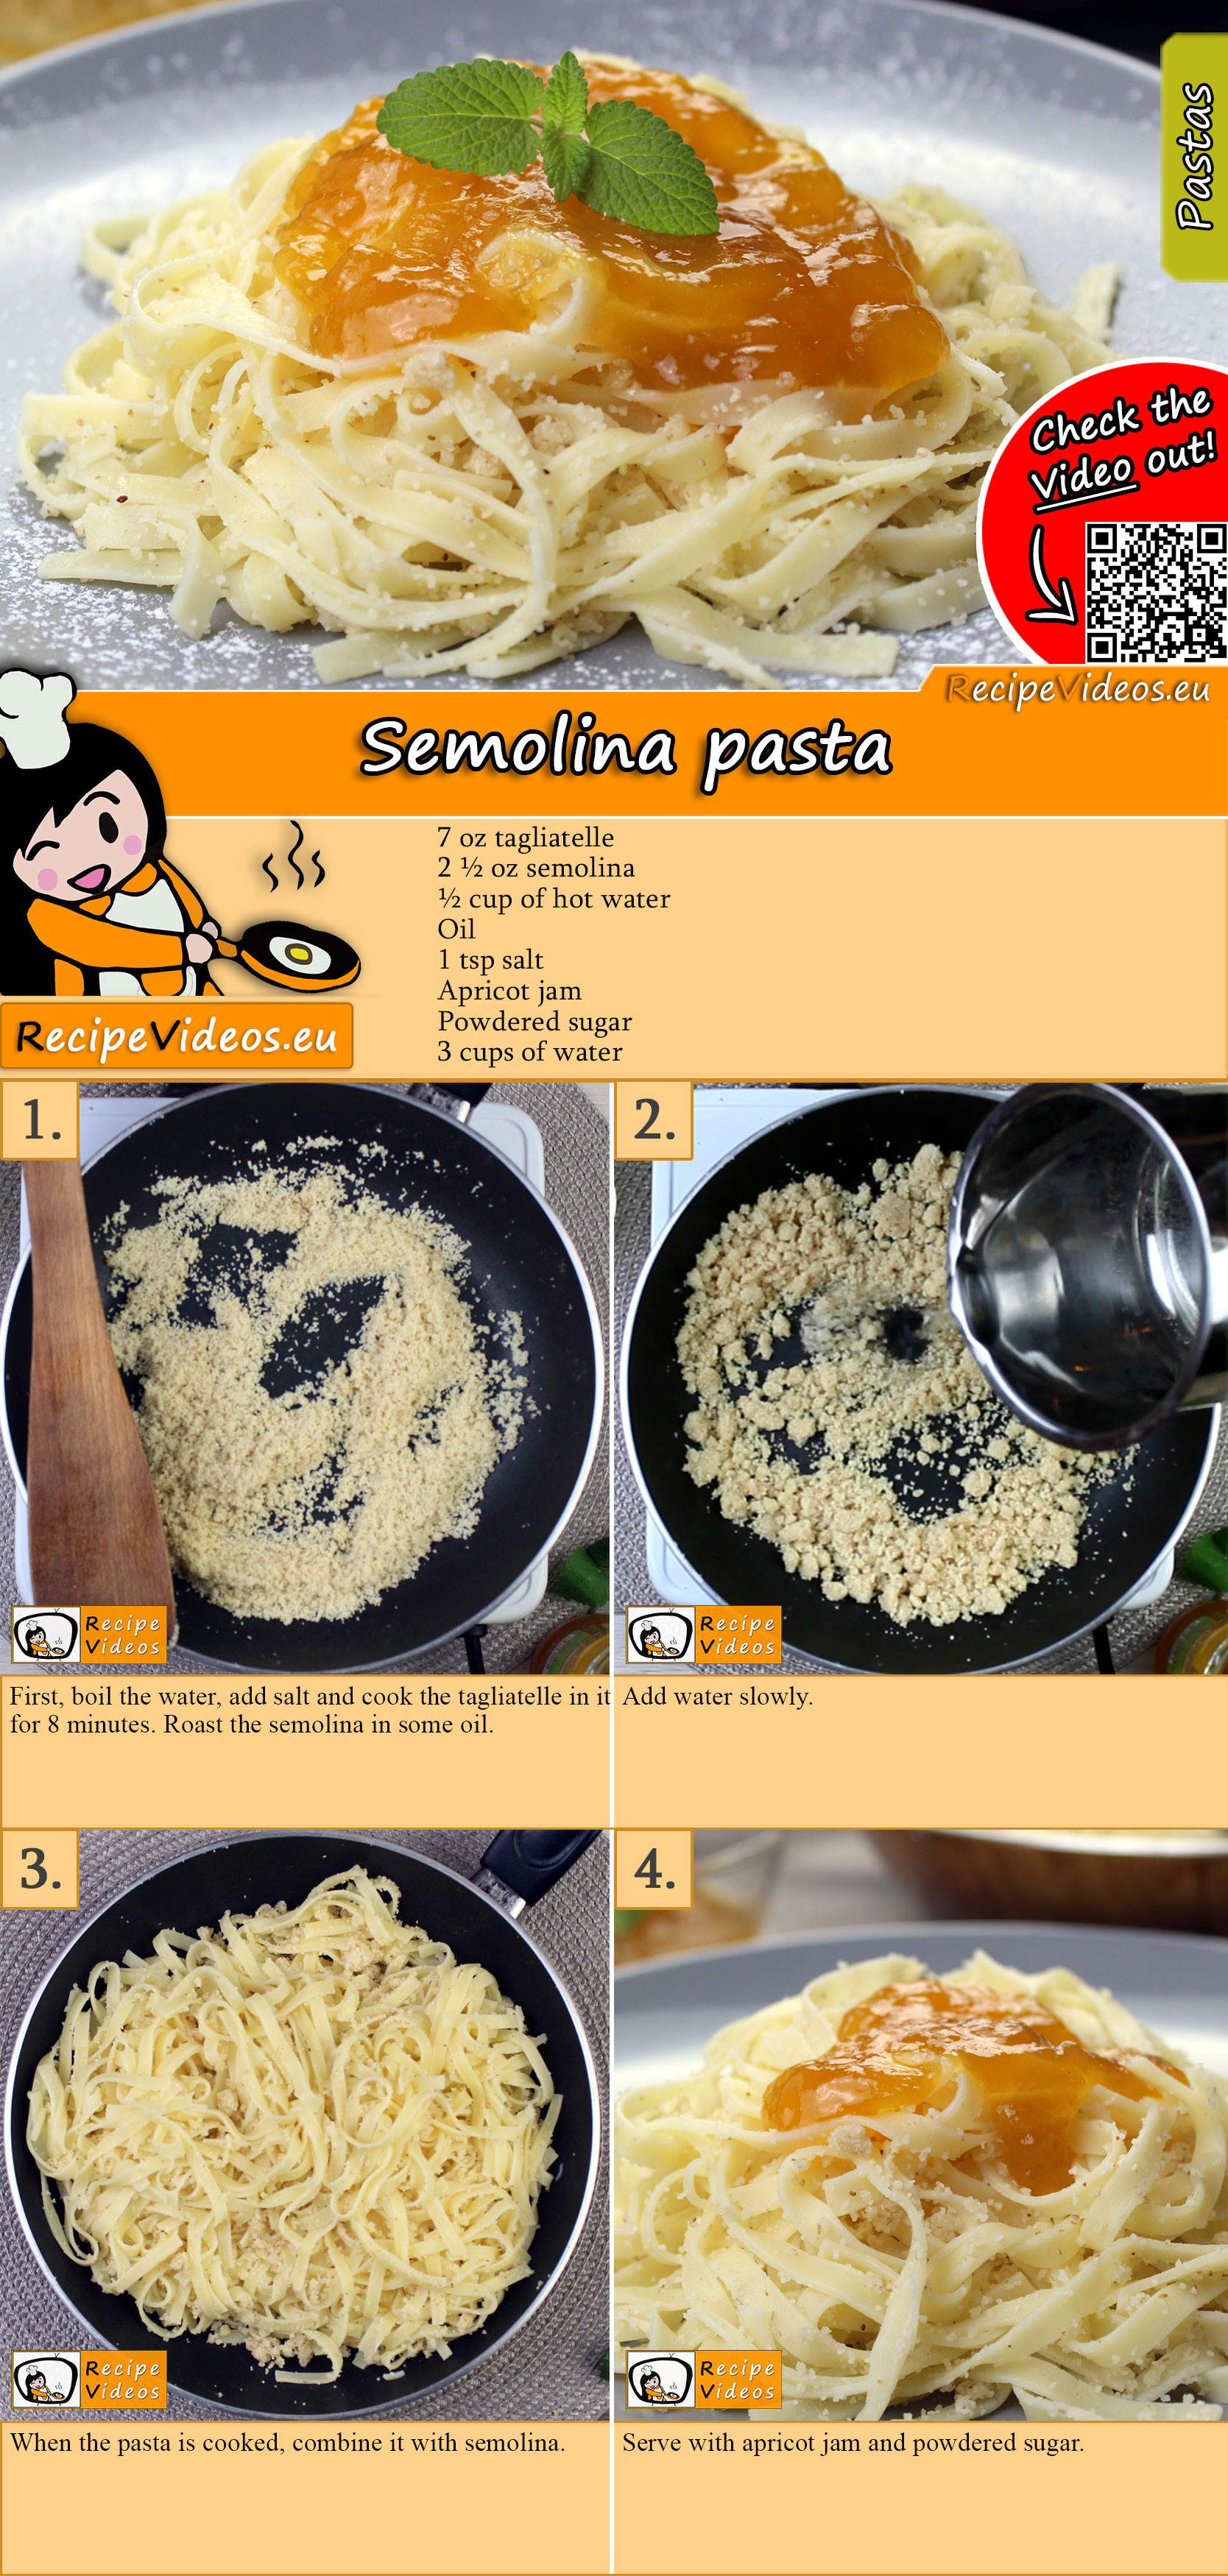 Semolina pasta recipe with video